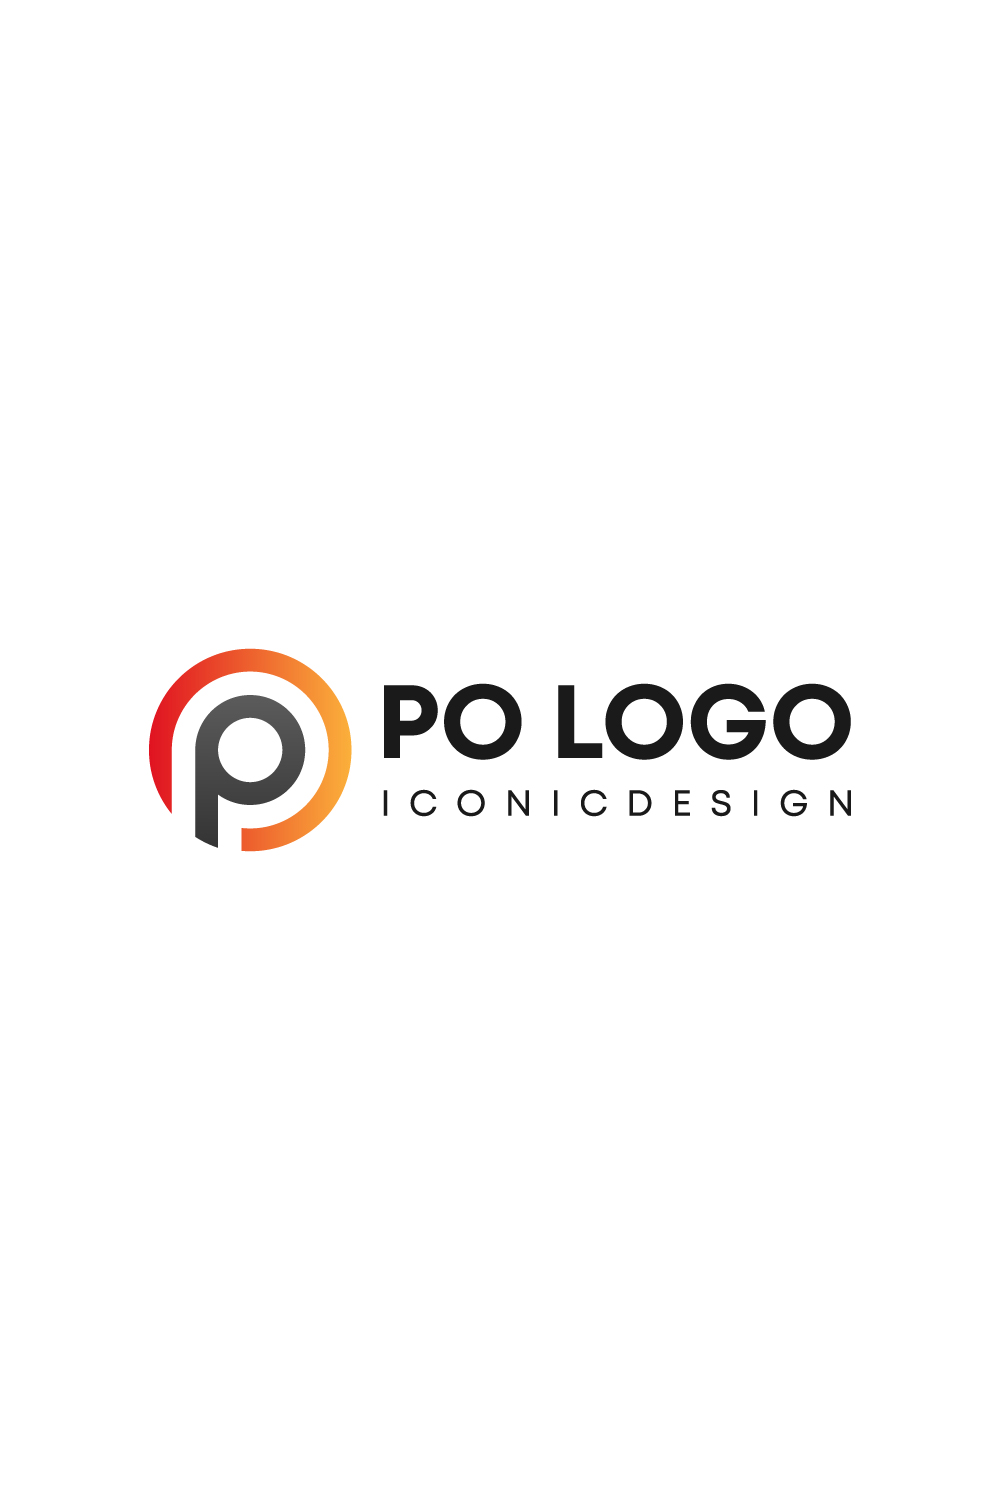 PO logo pinterest preview image.